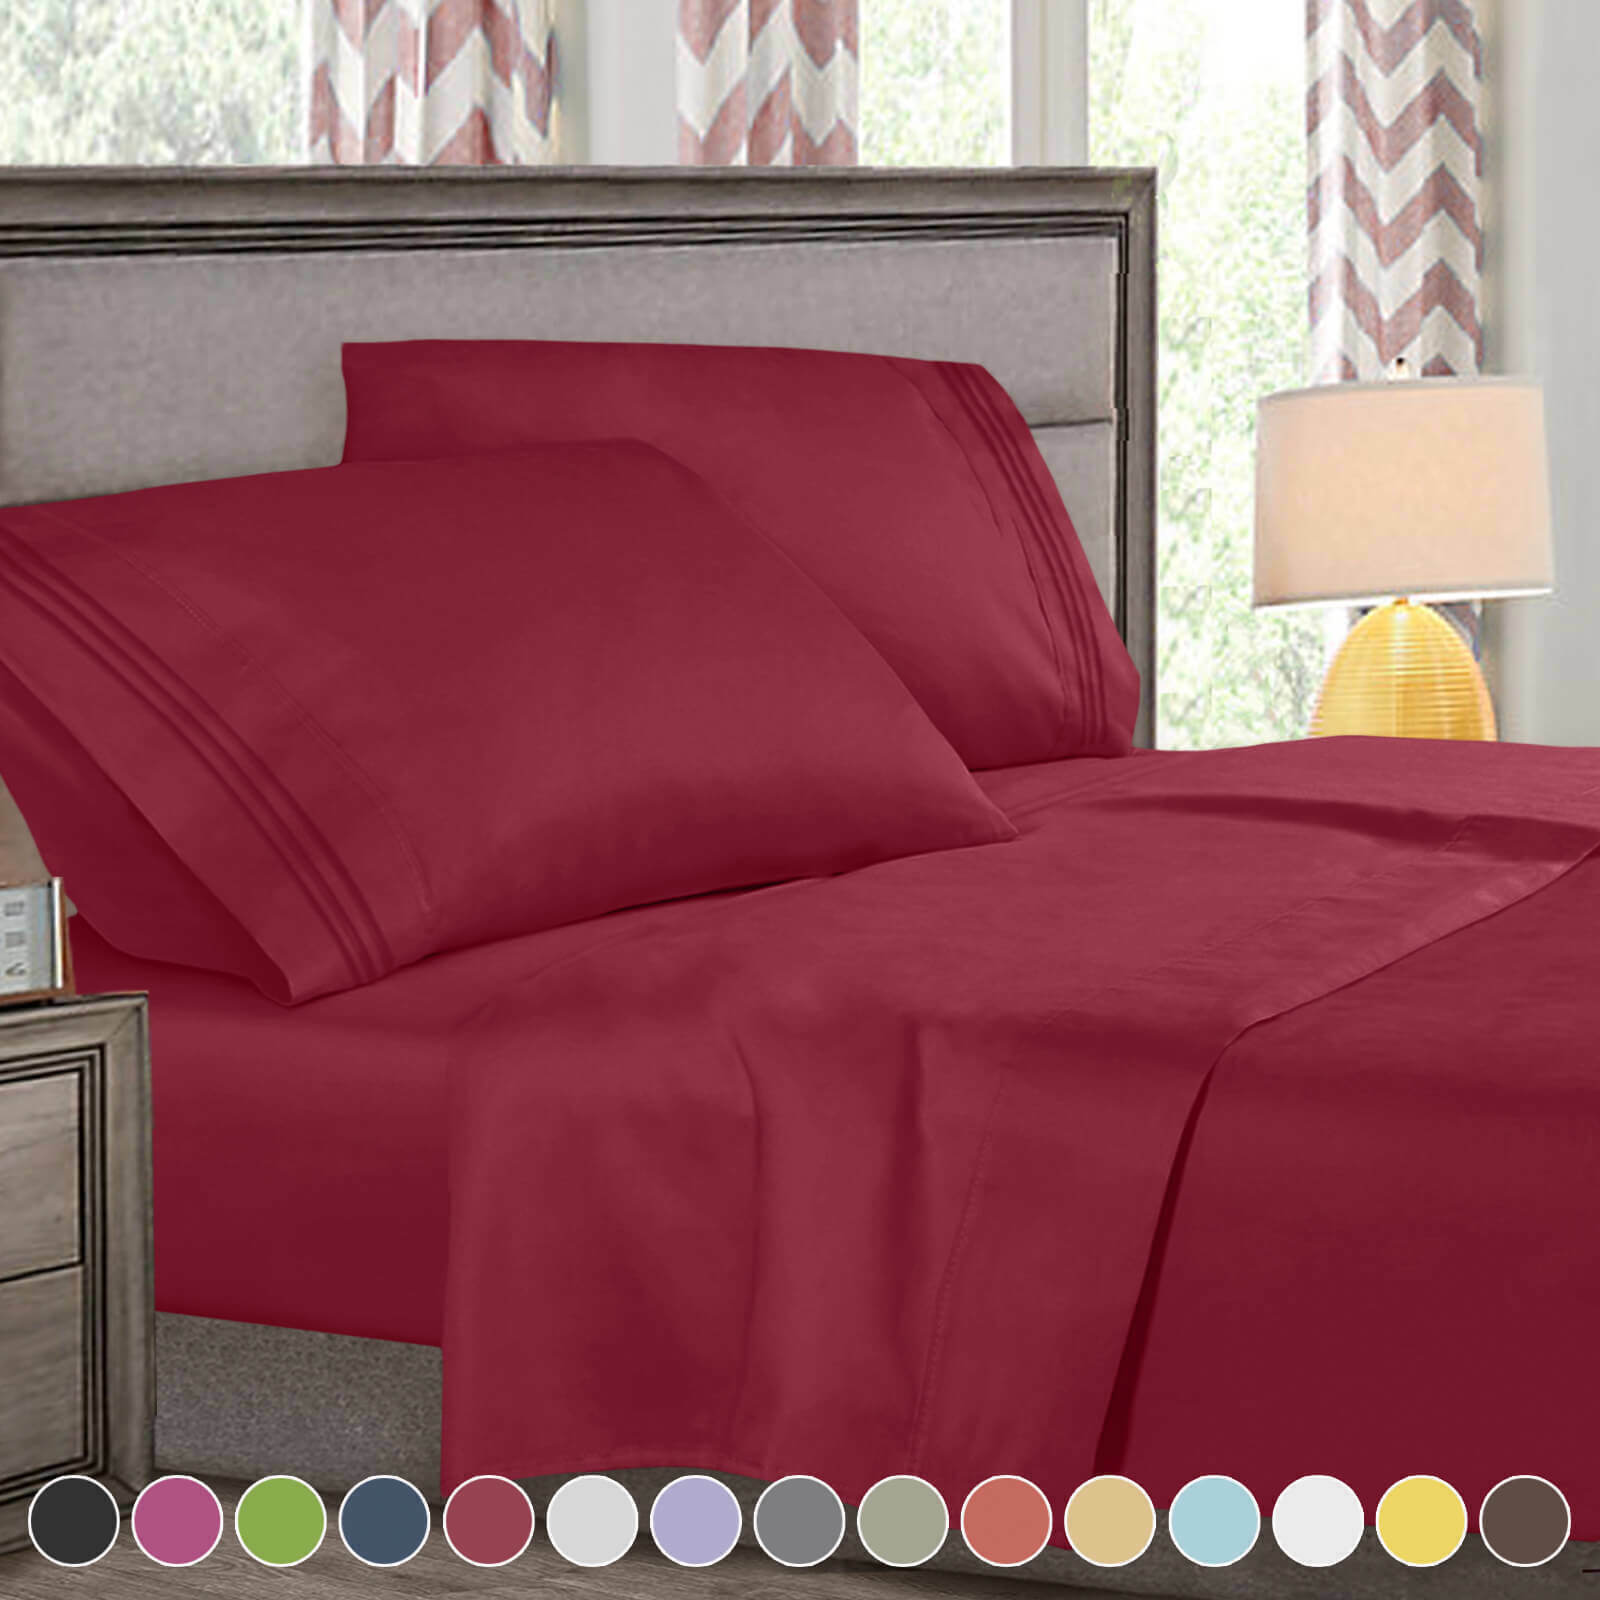 Bed Sheets - 4-Piece Deep Pocket Bed Sheet Set - 1800 Collection Hotel Quality - Split King / Burgundy Red